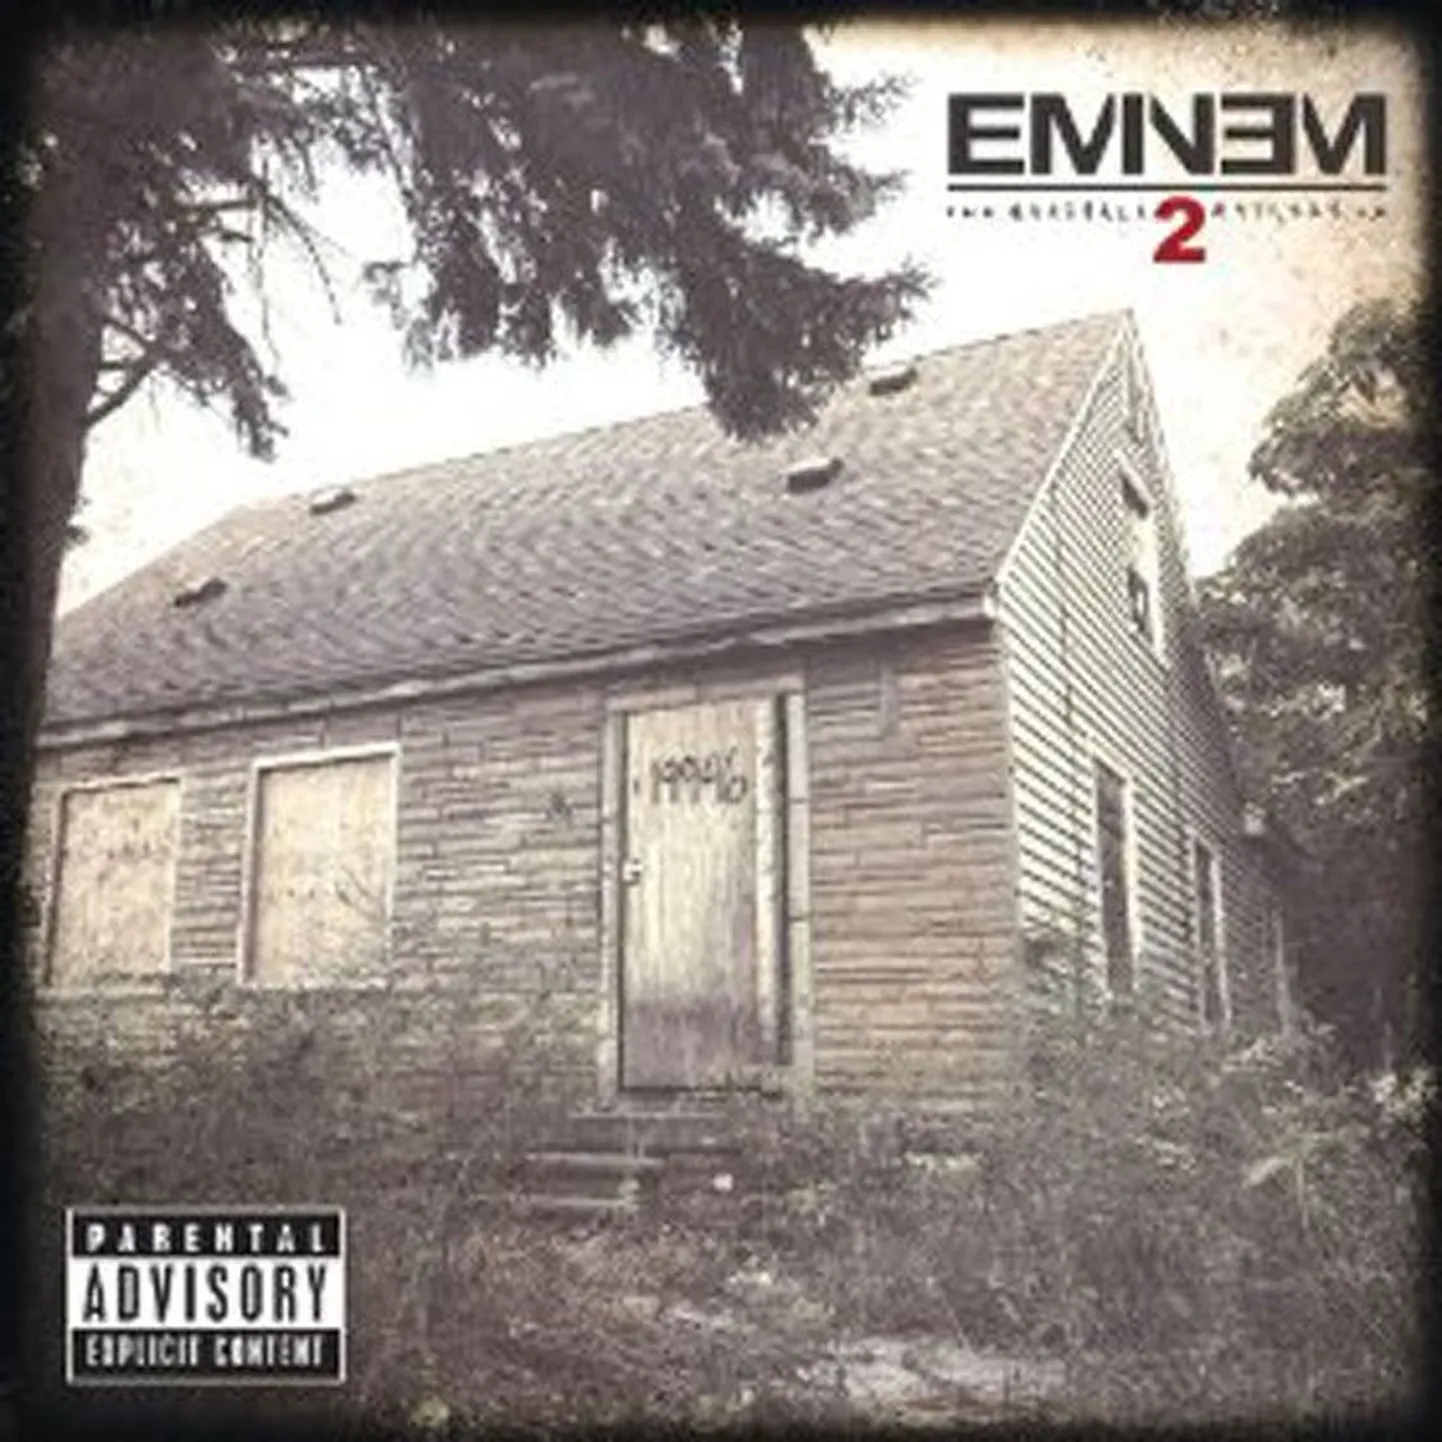 Eminem
«The Marshall Mathers LP 2»
(Shady/Aftermath/Interscope)